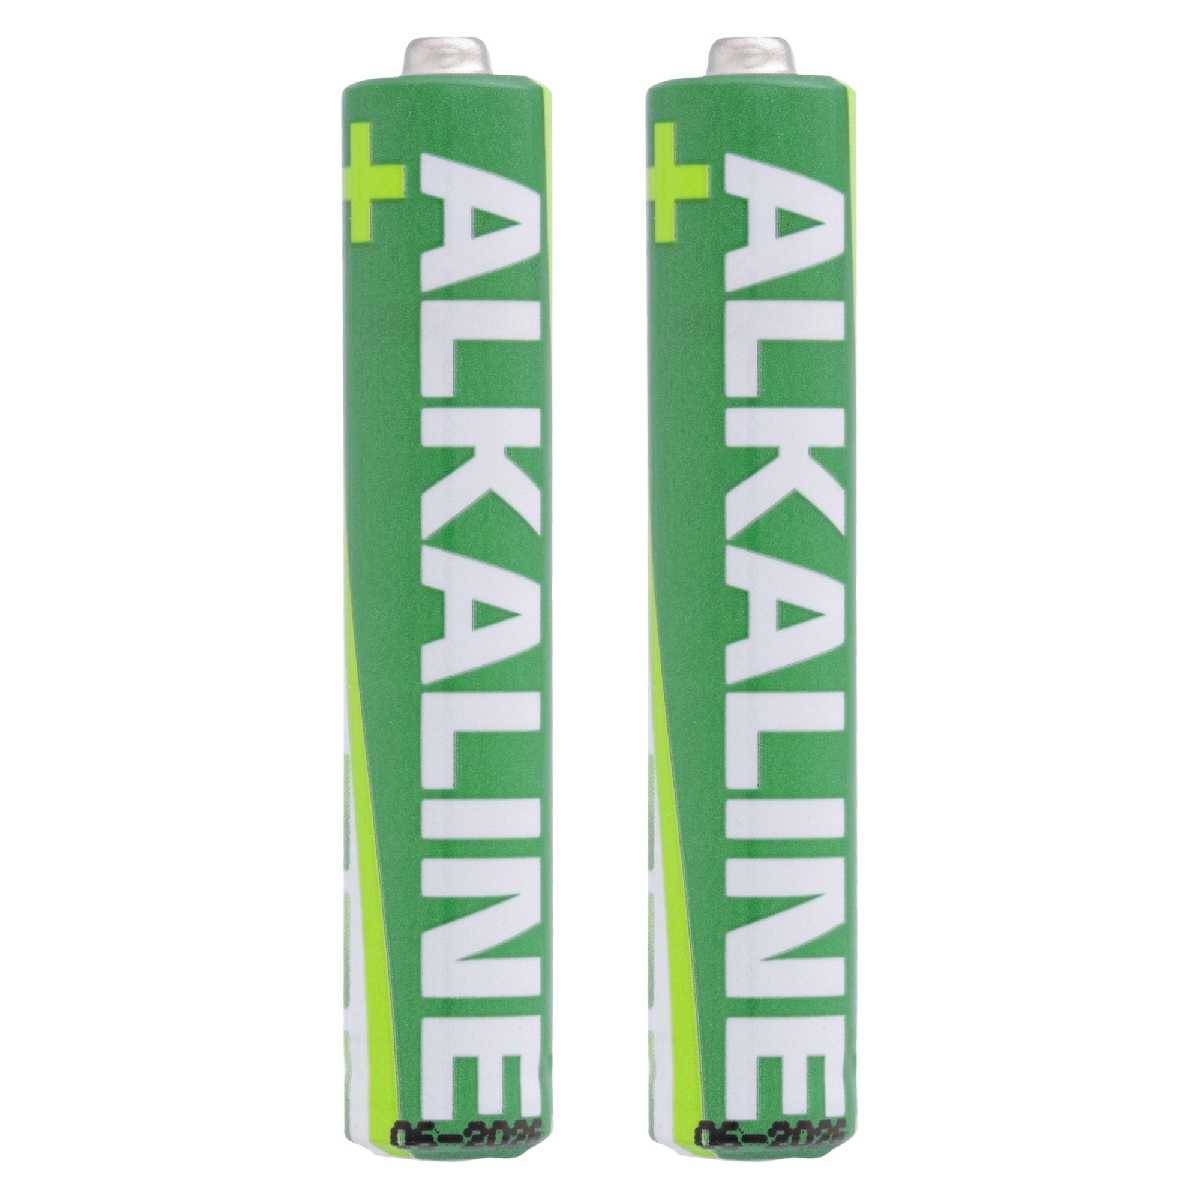 2er Batterien AAAA 1,5V Alkaline